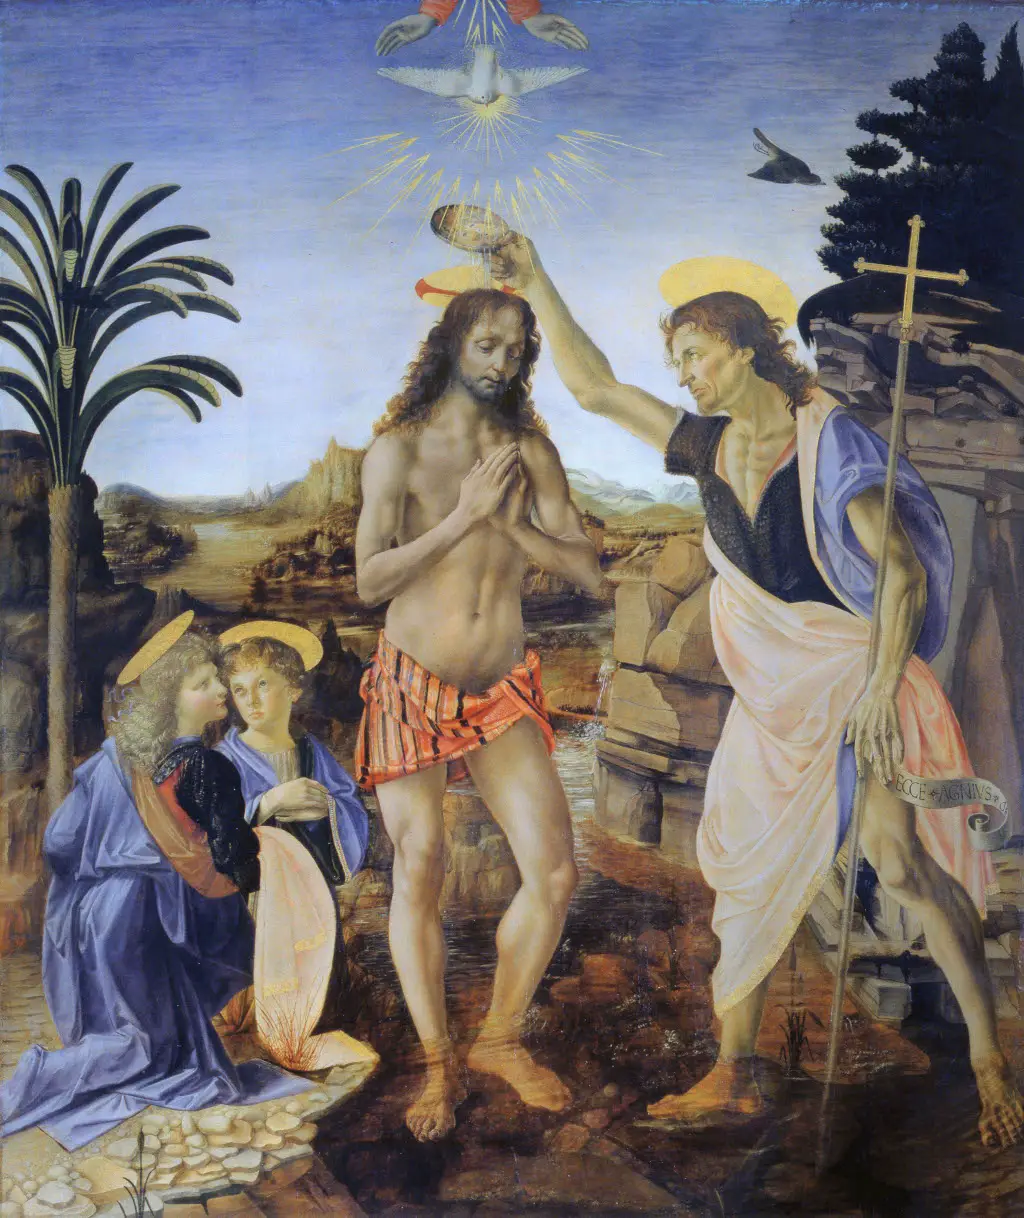 The Baptism of Christ in Detail by Leonardo da Vinci and Verrocchio